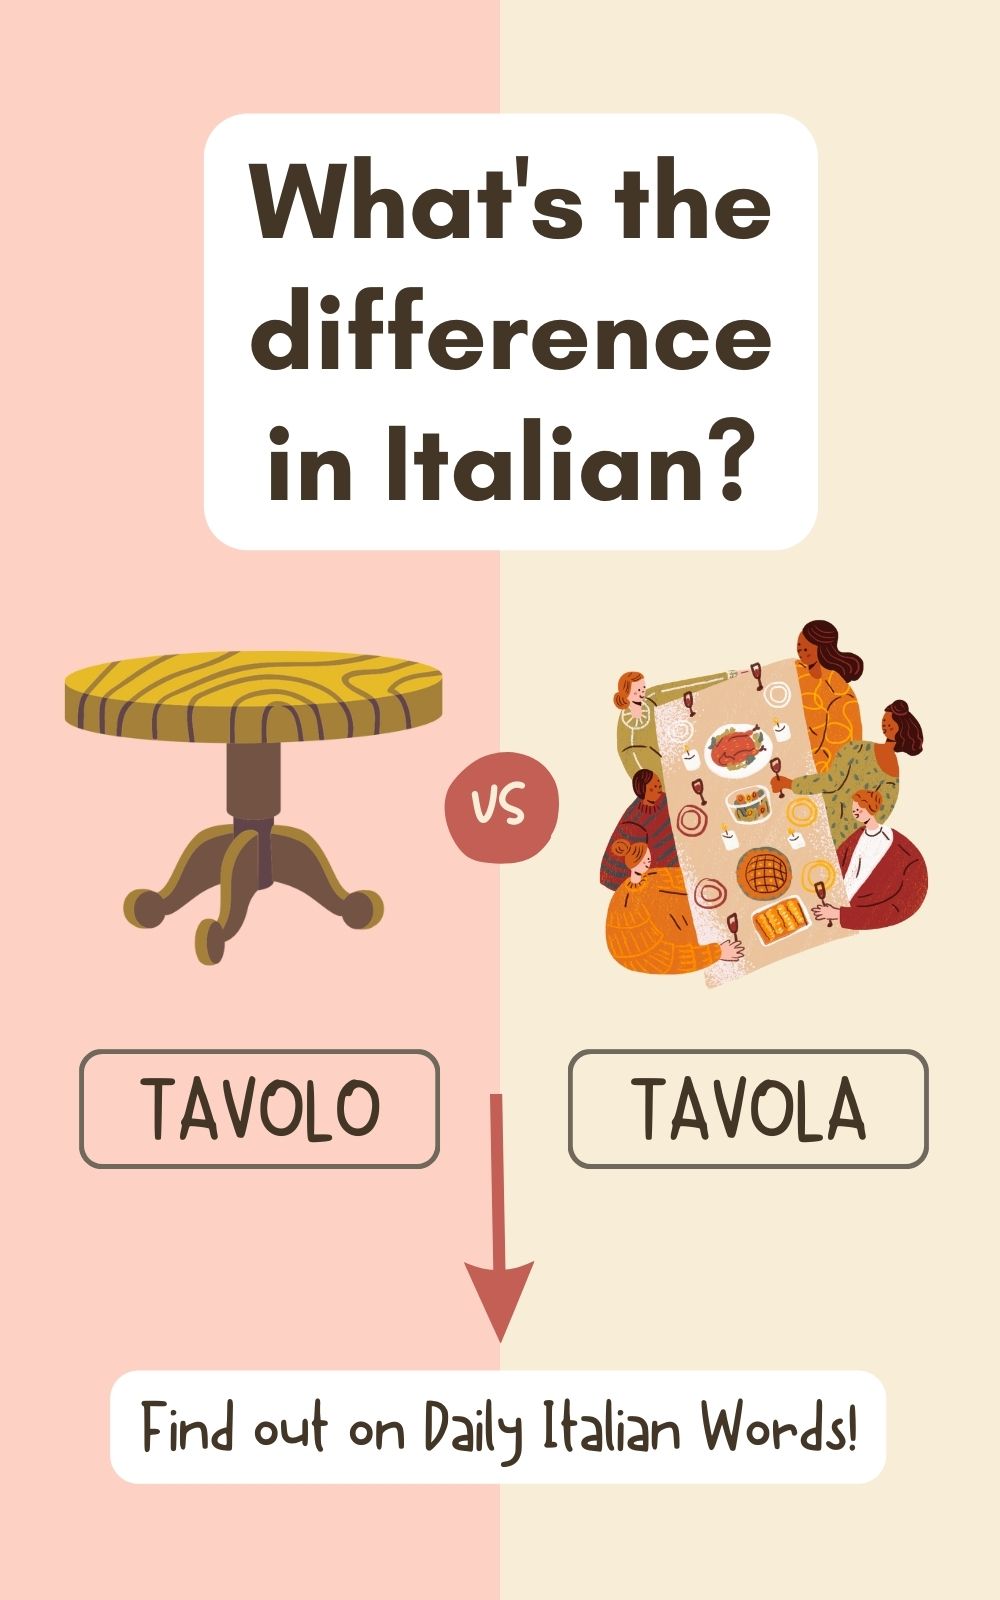 tavolo vs tavola in italian